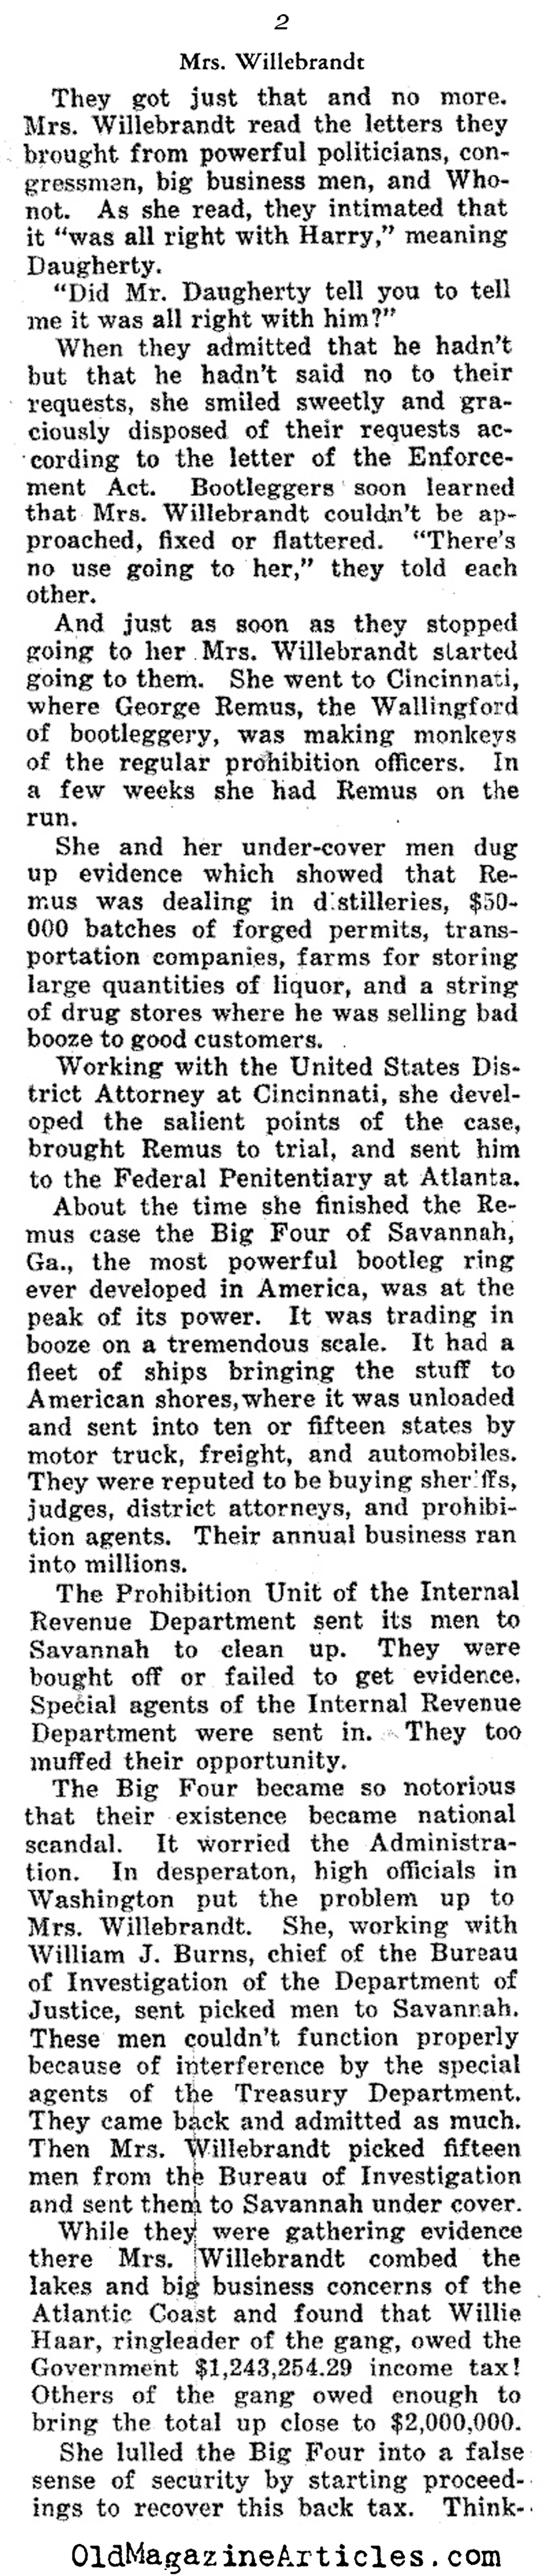 Mabel Walker Willebrandt Takes On Prohibition (Collier's Magazine, 1924)